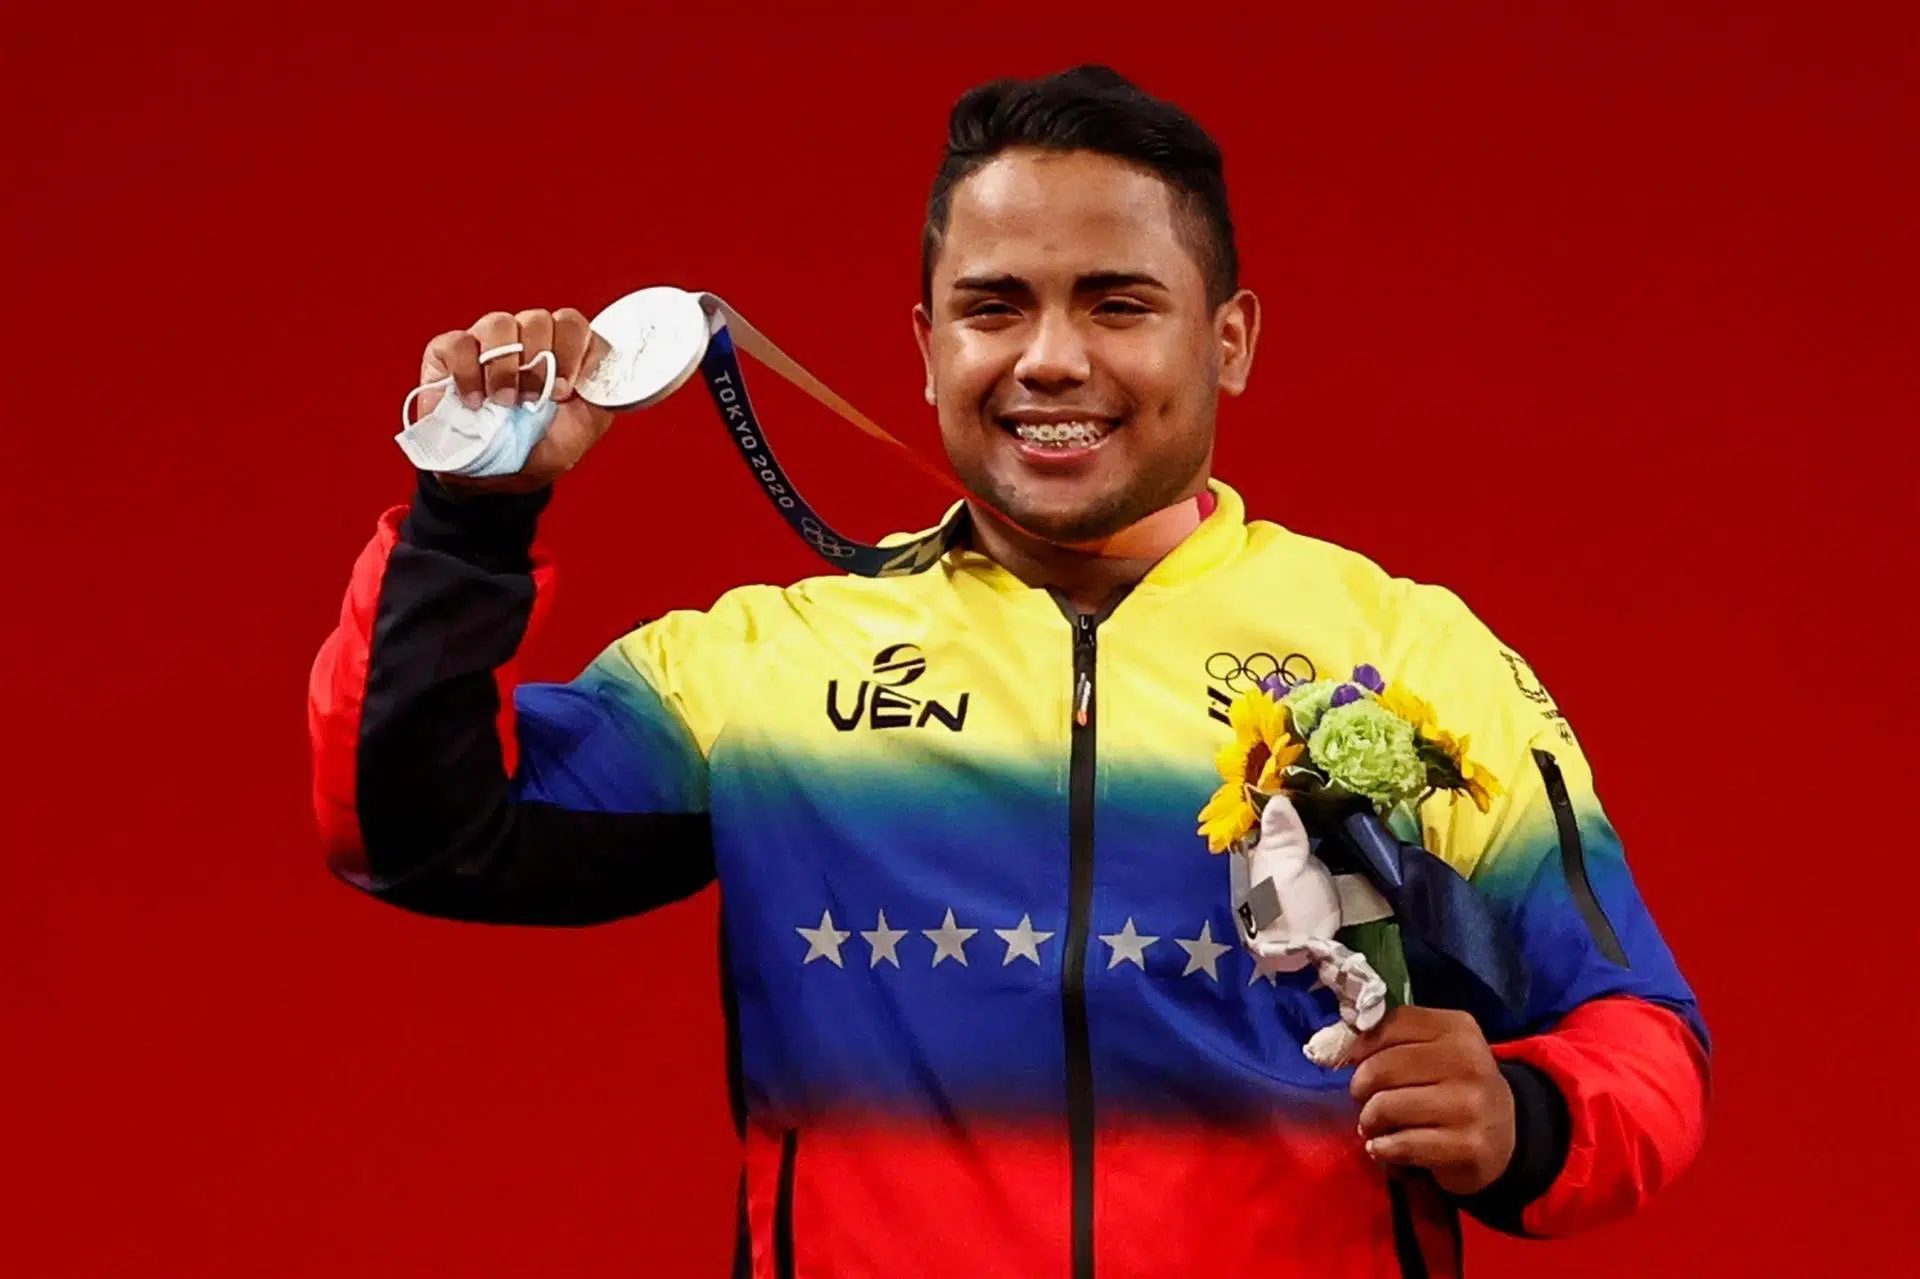 atletas venezolanos se alistan con miras a paris 2024 laverdaddemonagas.com f44951295a2eb869ff19db0ec5abb191dc0dbdb0w.jpg